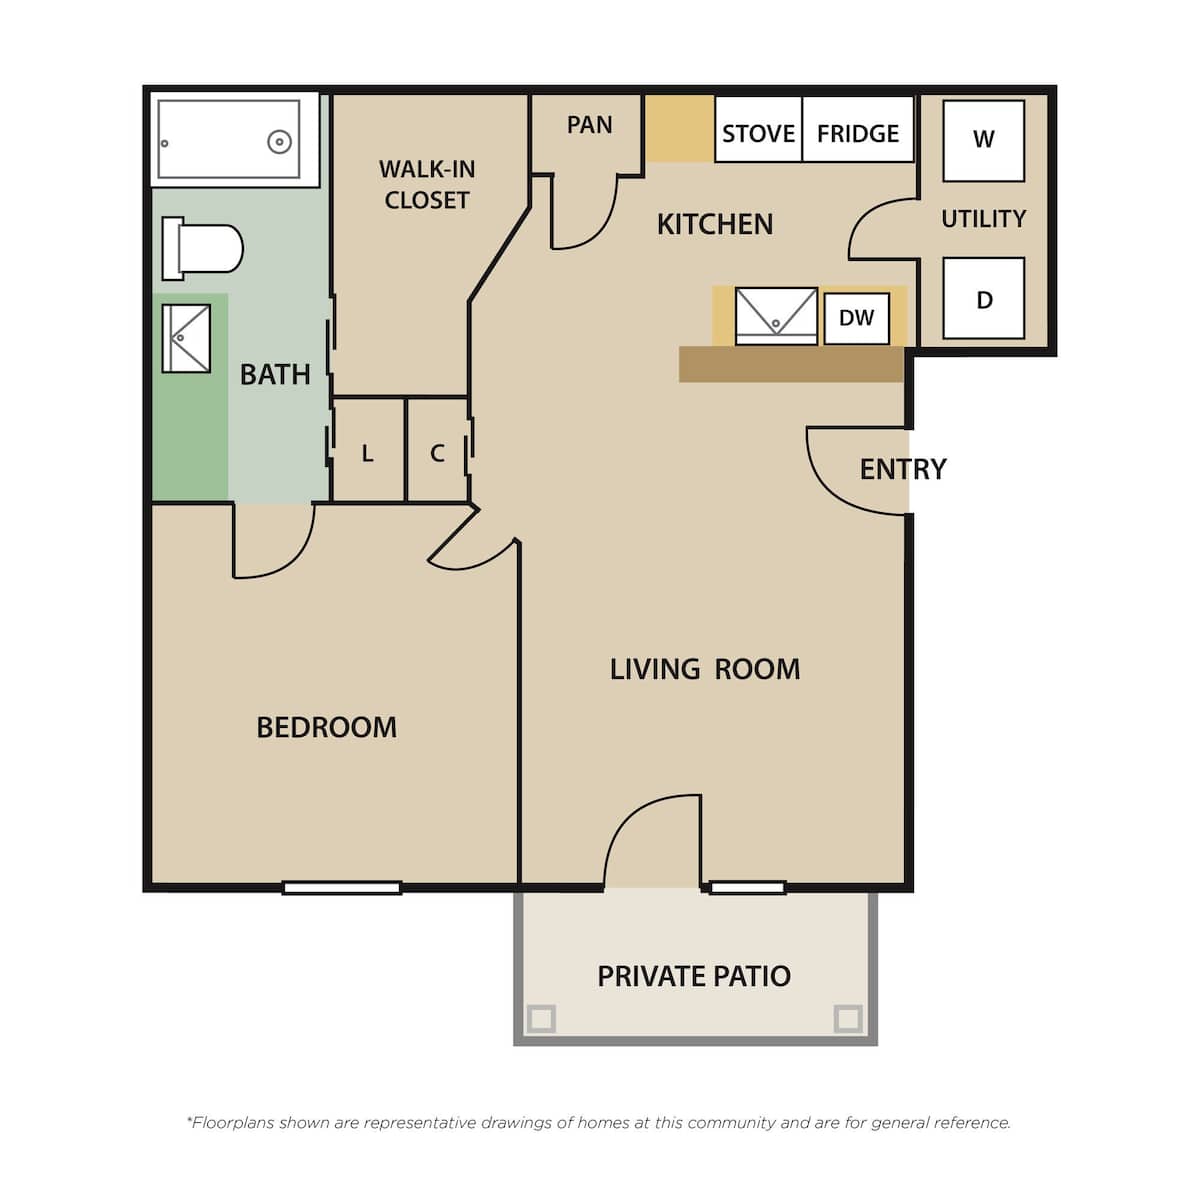 Floorplan diagram for PARK A1, showing 1 bedroom